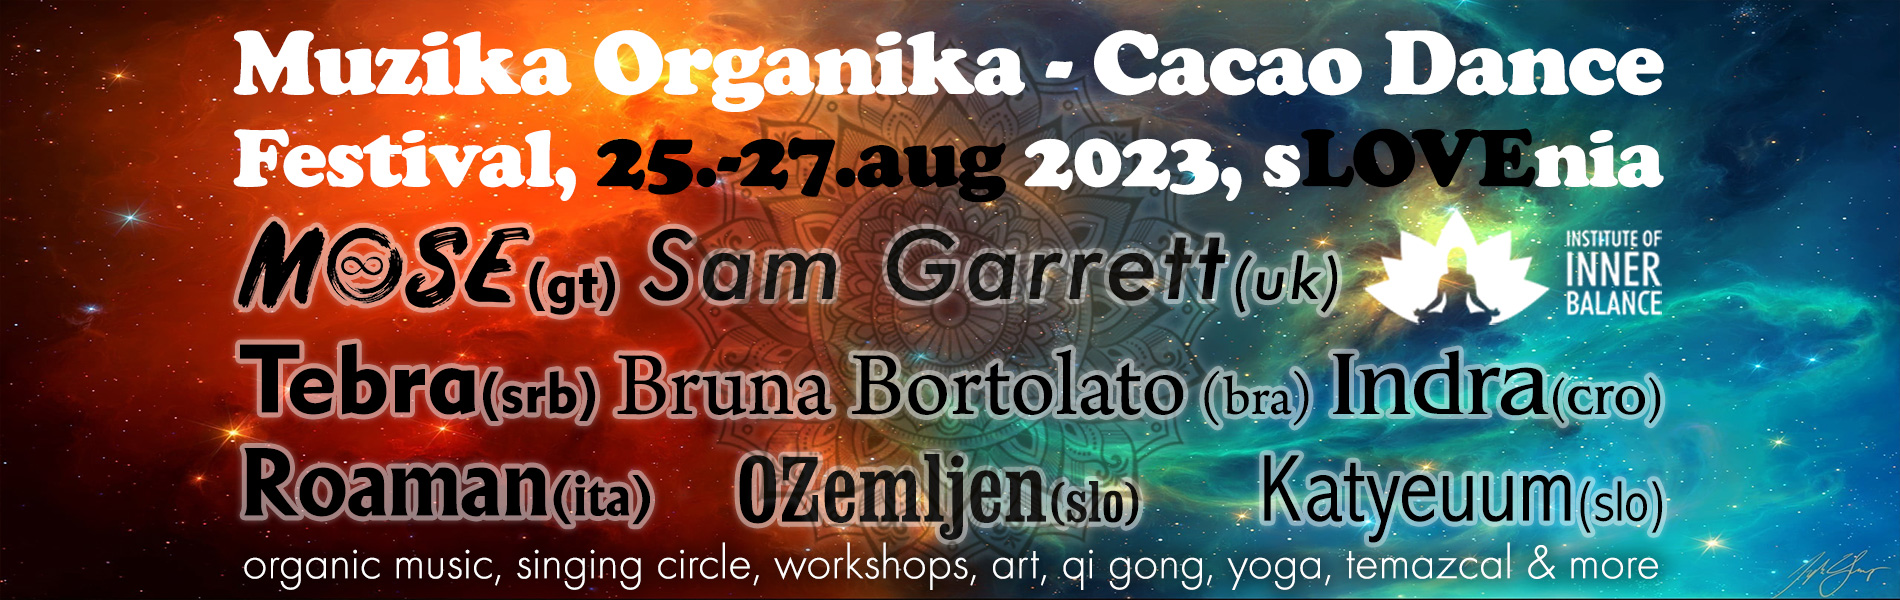 Muzika Organika - Cacao Dance Festival